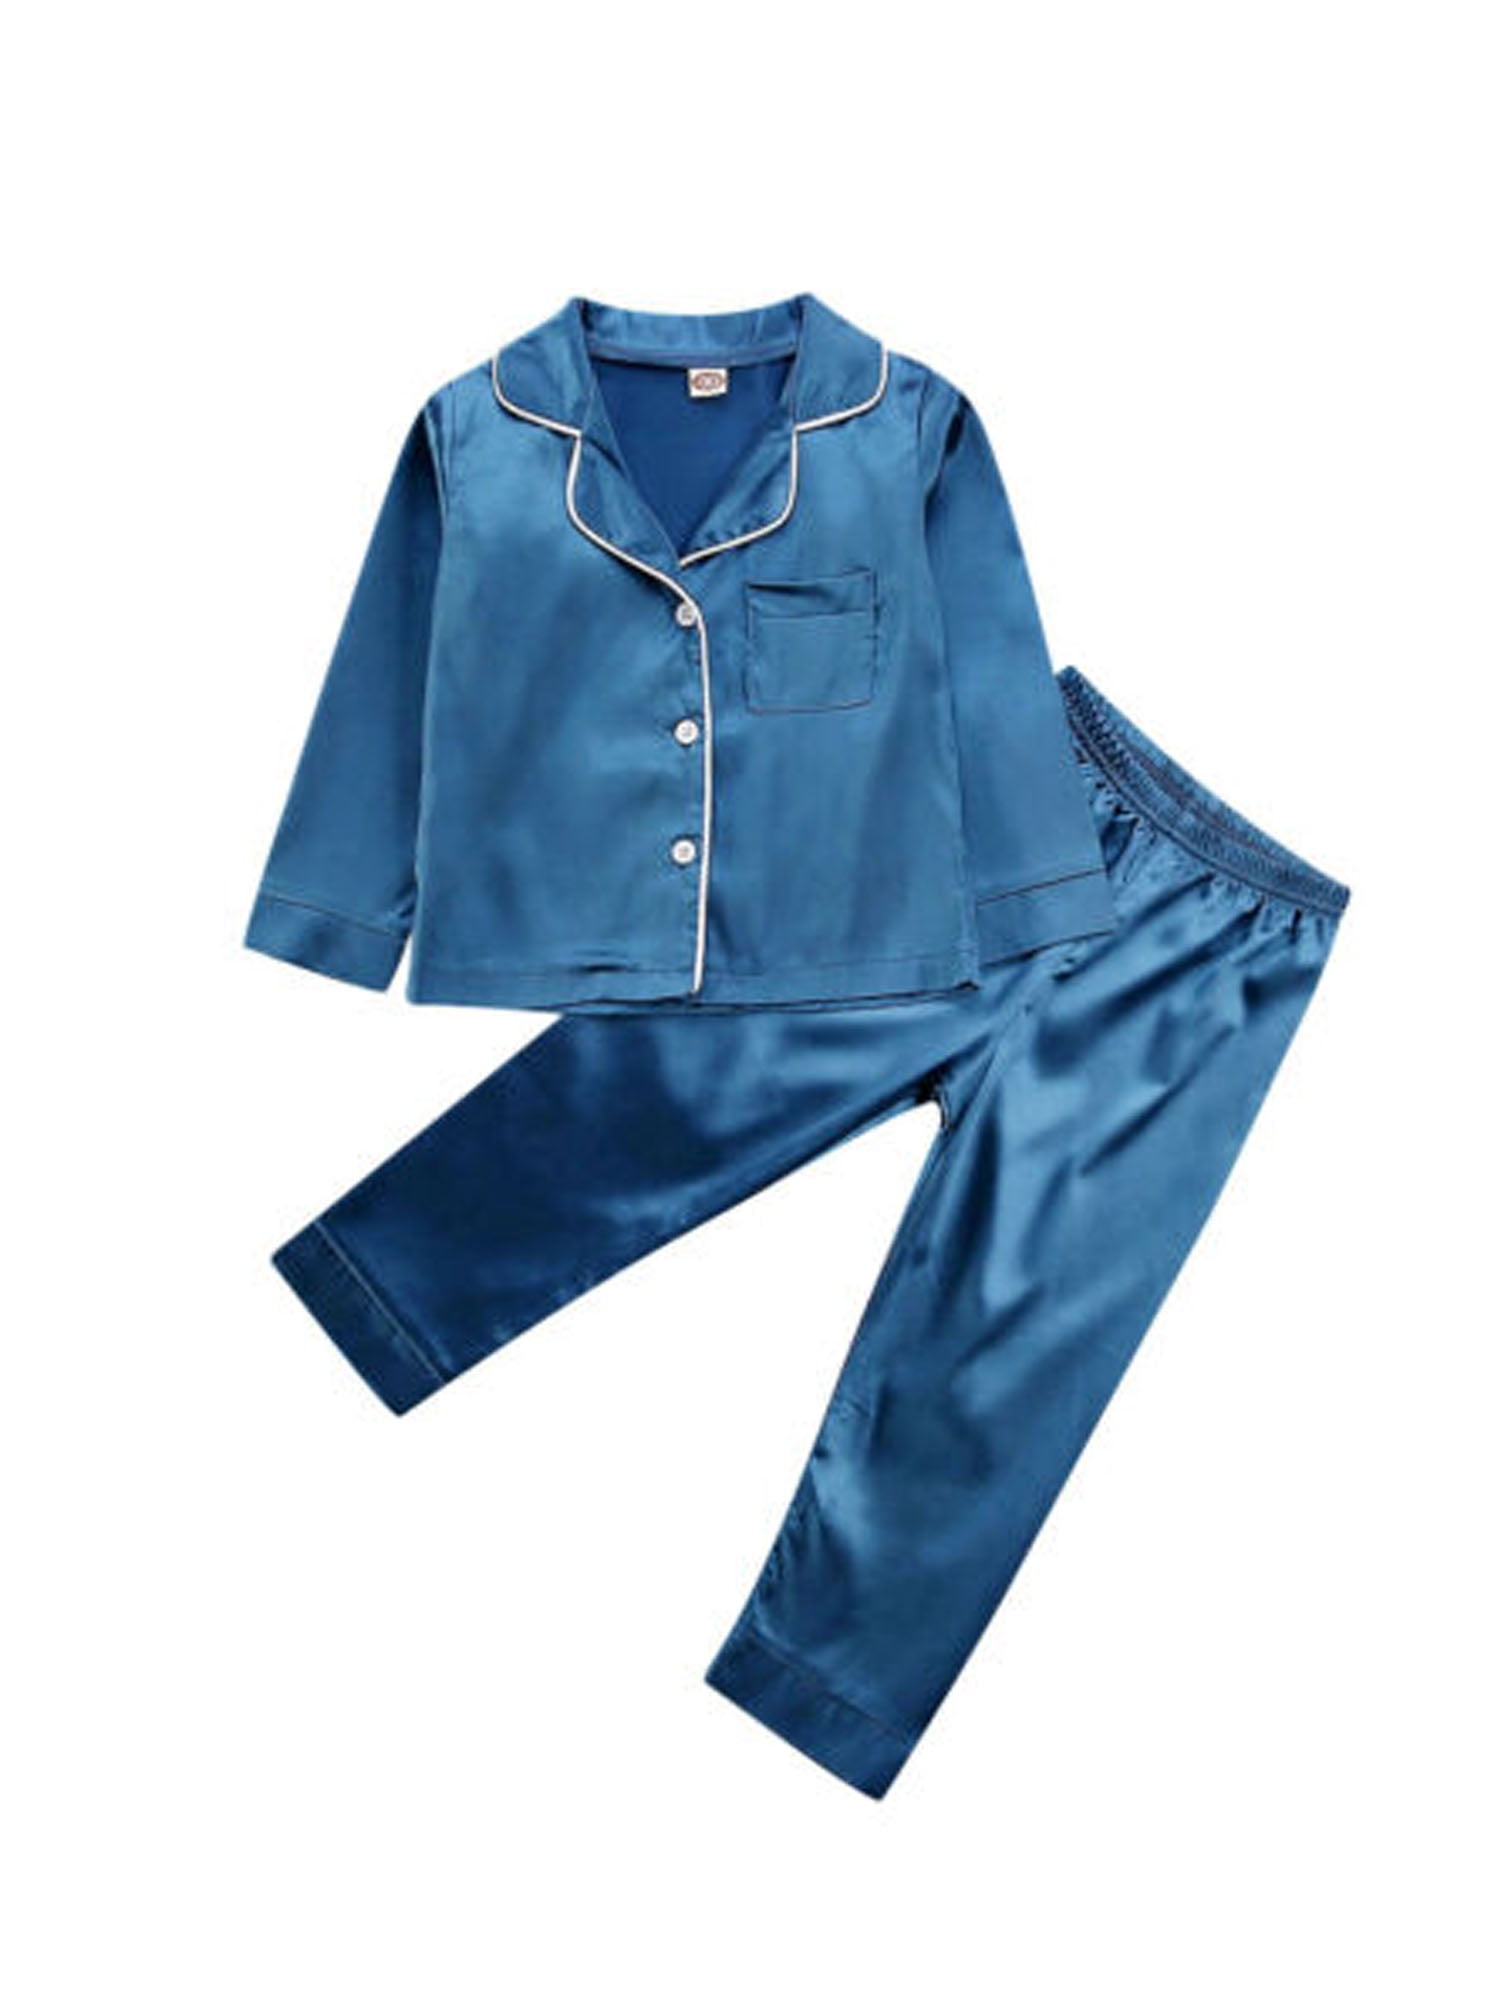 New Kids Boys Girls Pyjamas Sleepwear Silk Satin Pajamas Sets Nightwear Homewear 